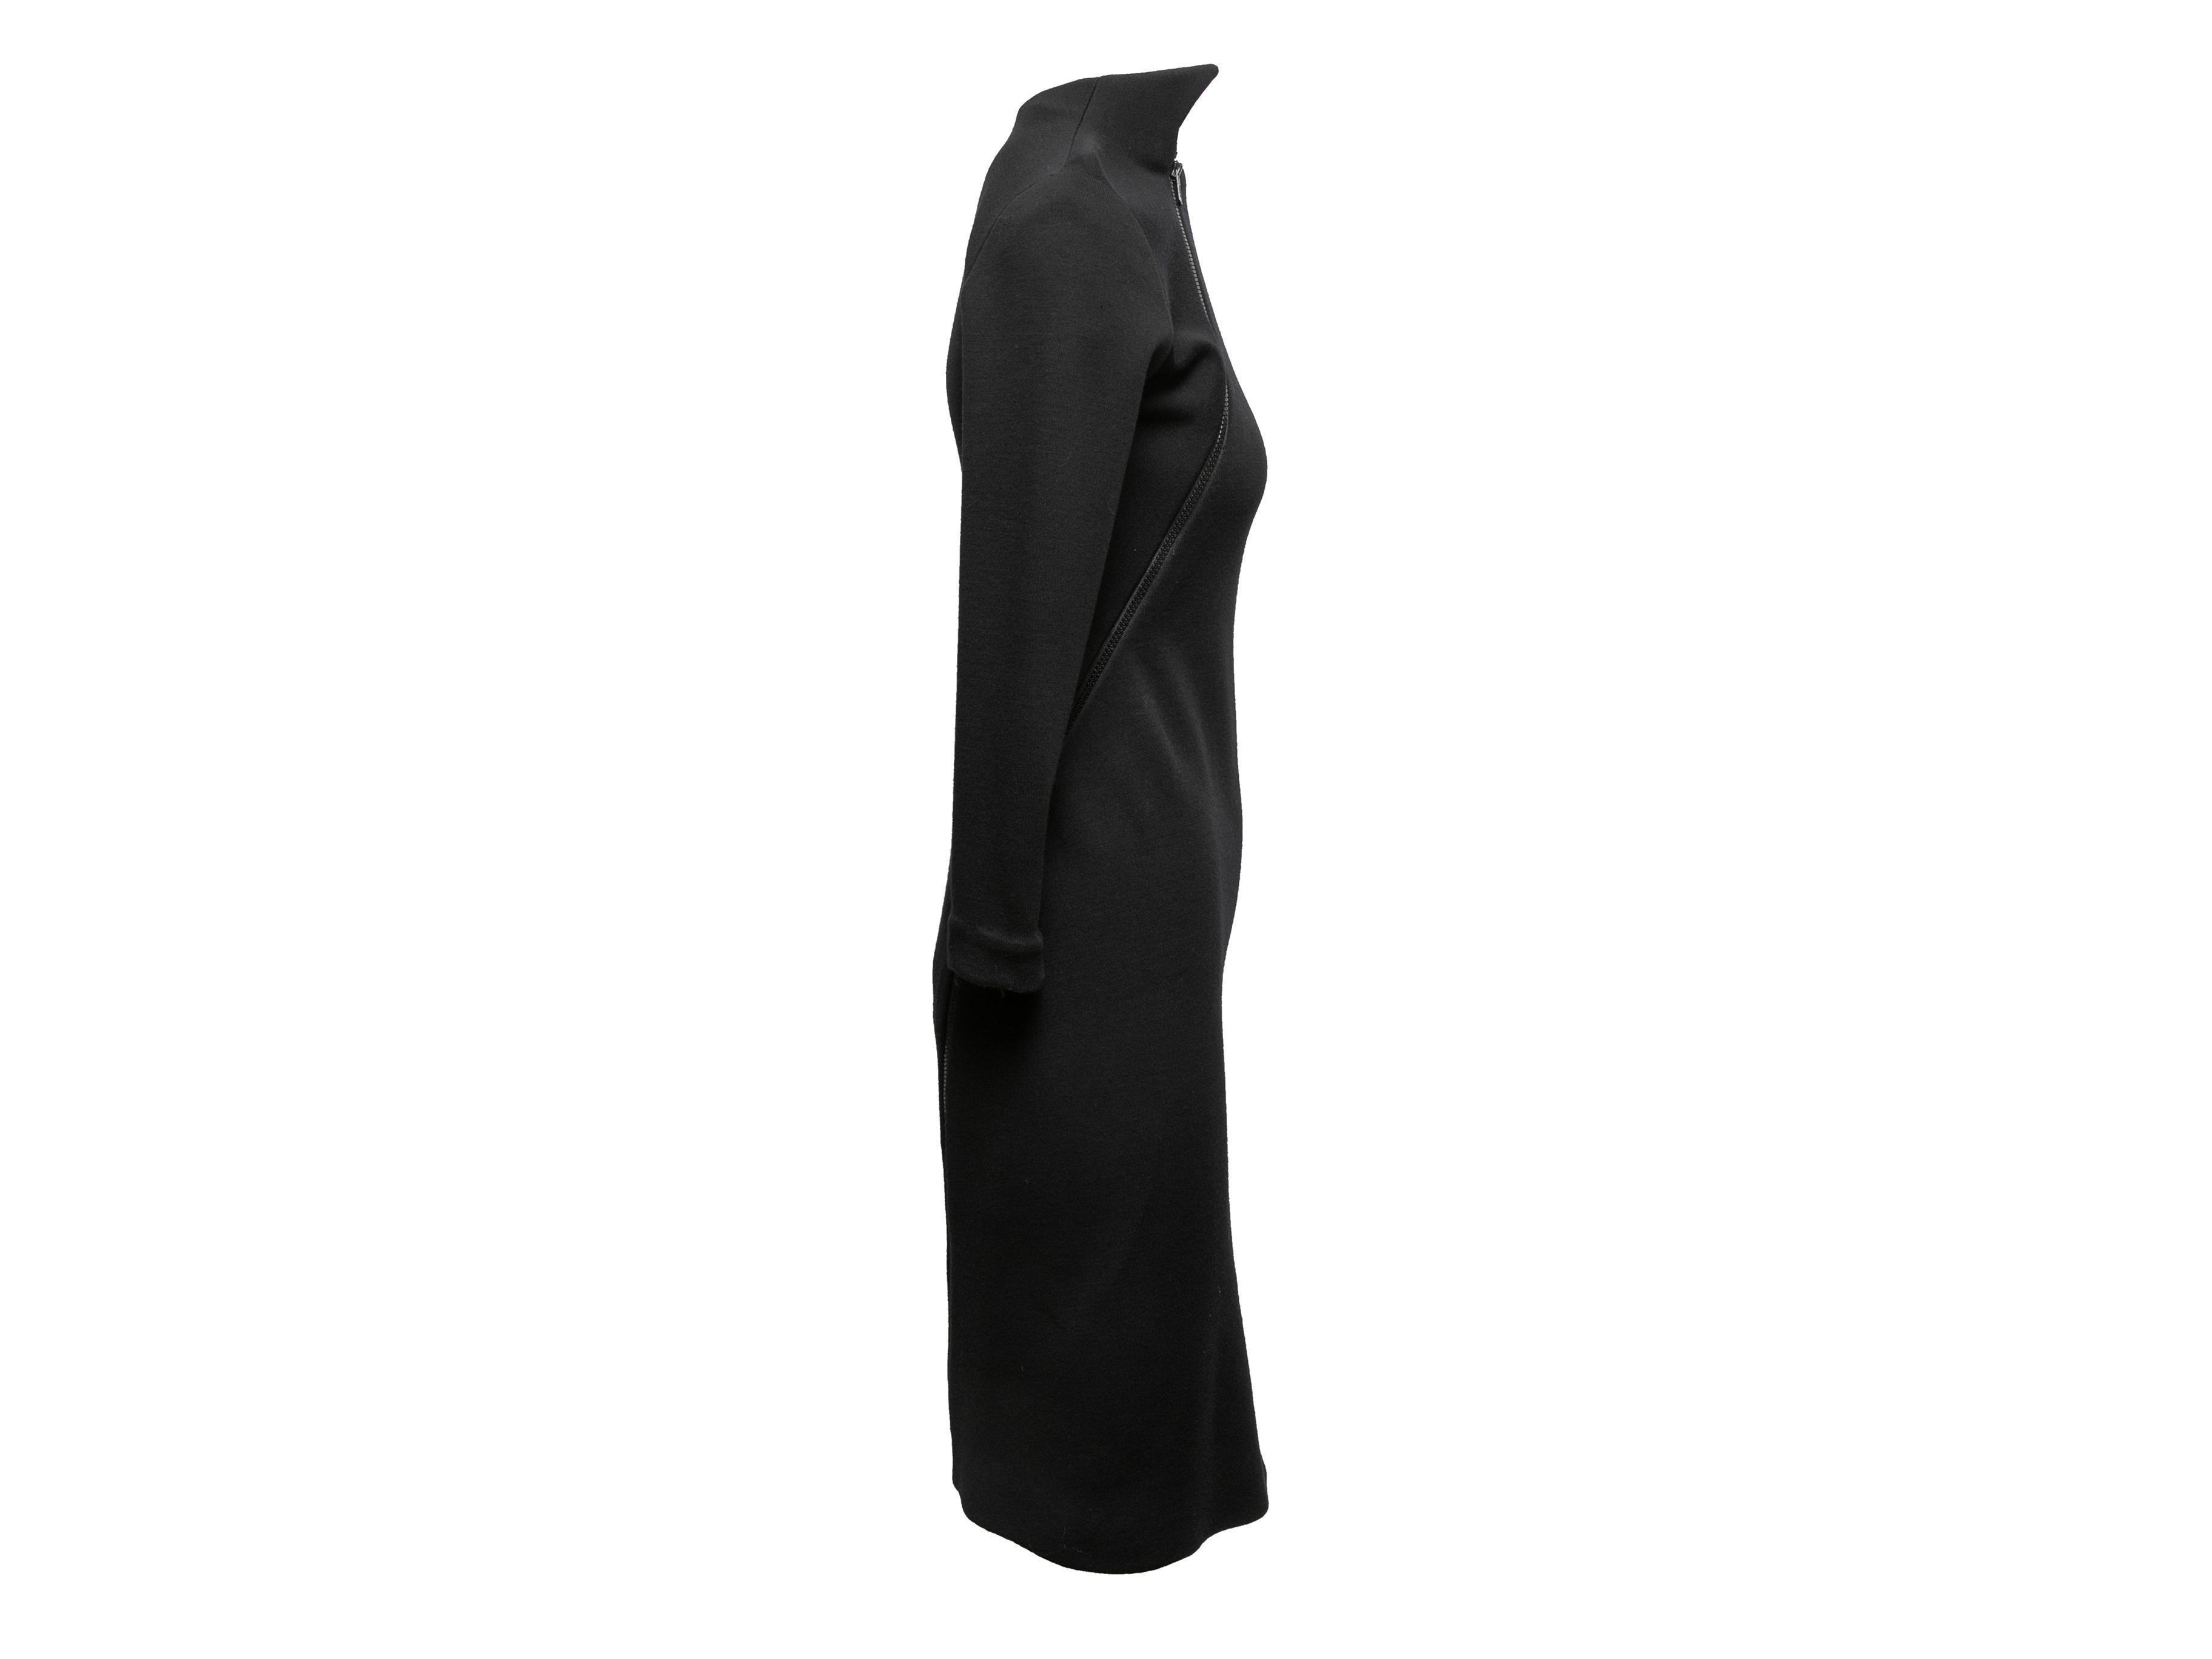 Vintage black long sleeve dress by Geoffrey Beene. Circa 1980s. Asymmetrical zip closure. 30